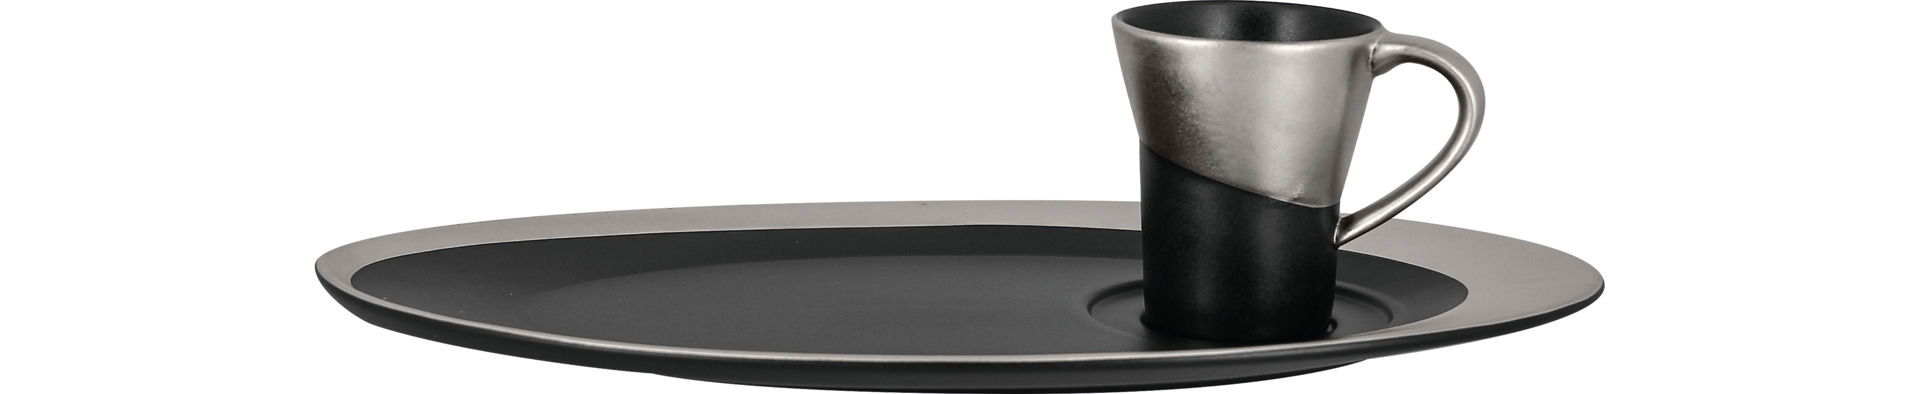 Espressotasse 60 mm / 0,09 l schwarz / silber